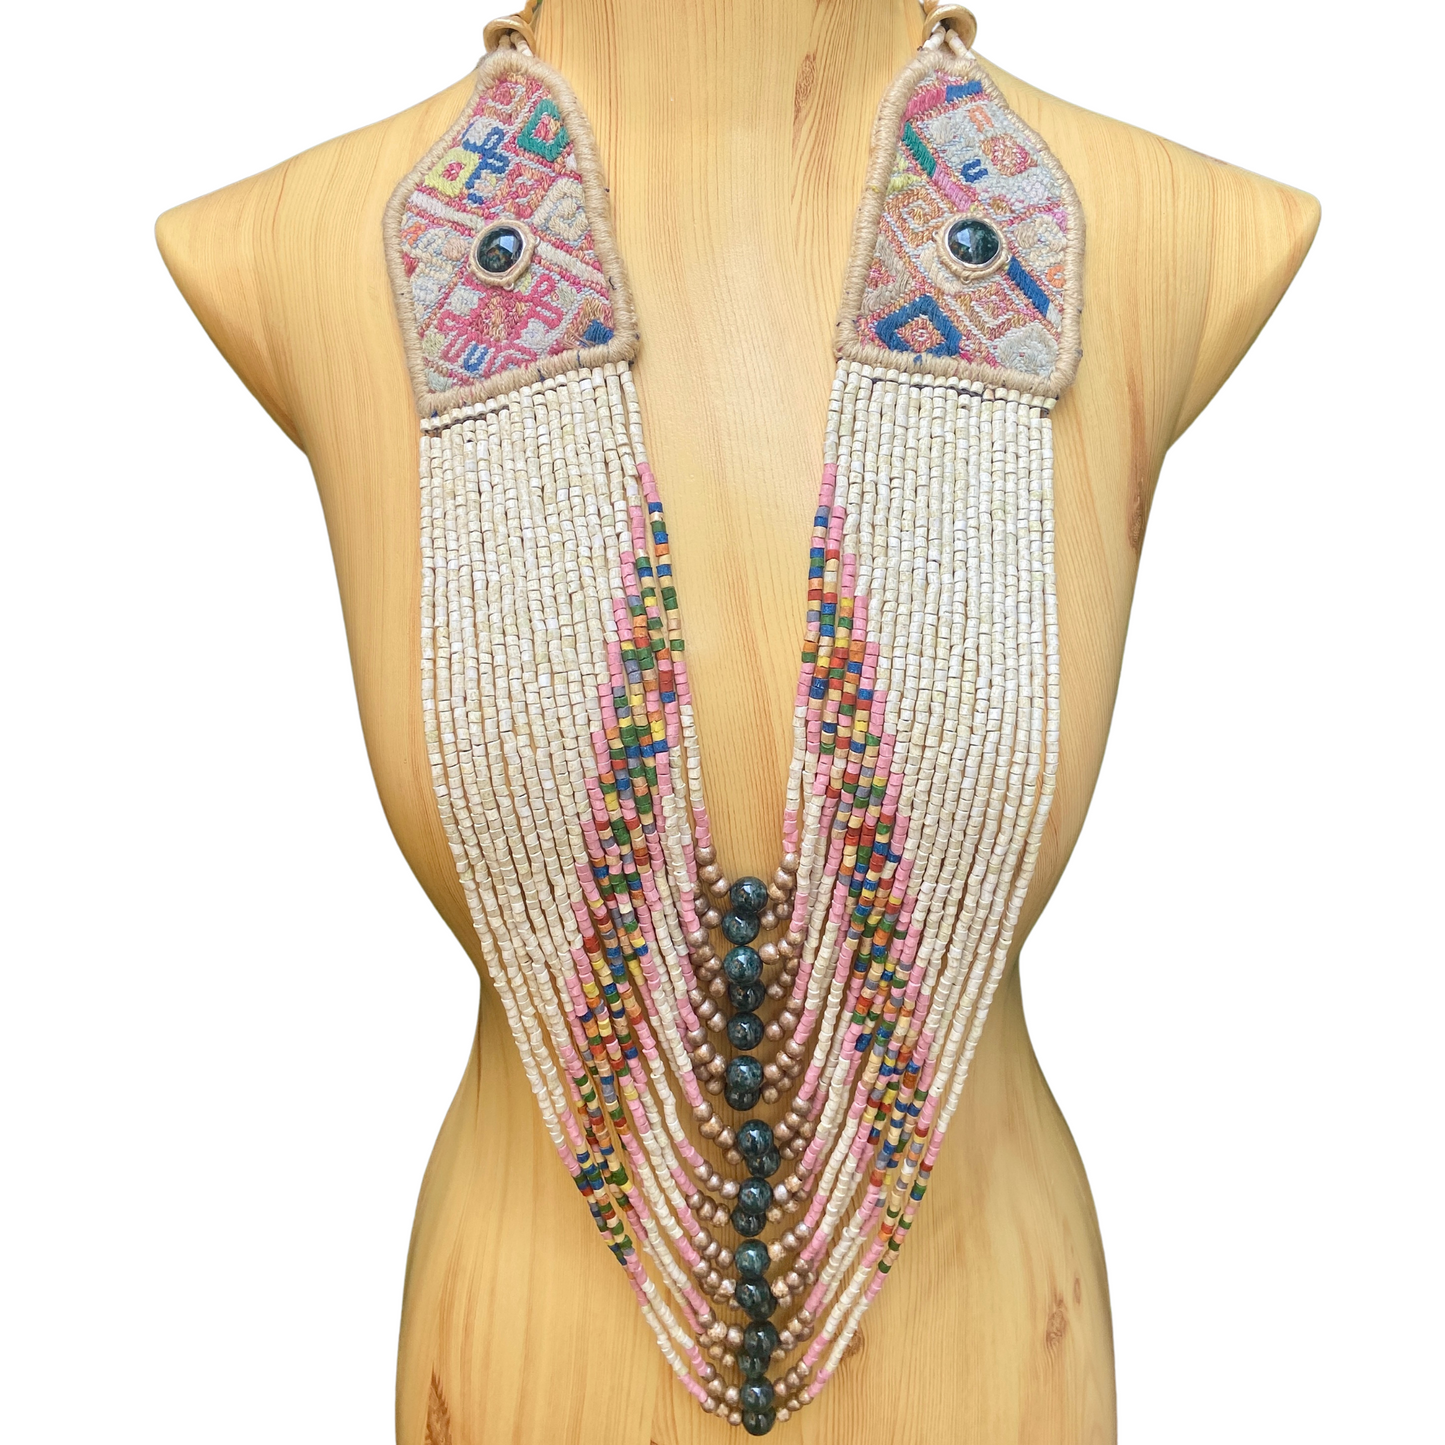 Vintage Textile with Jade Chest Pieces - "Jade Exclusiva"